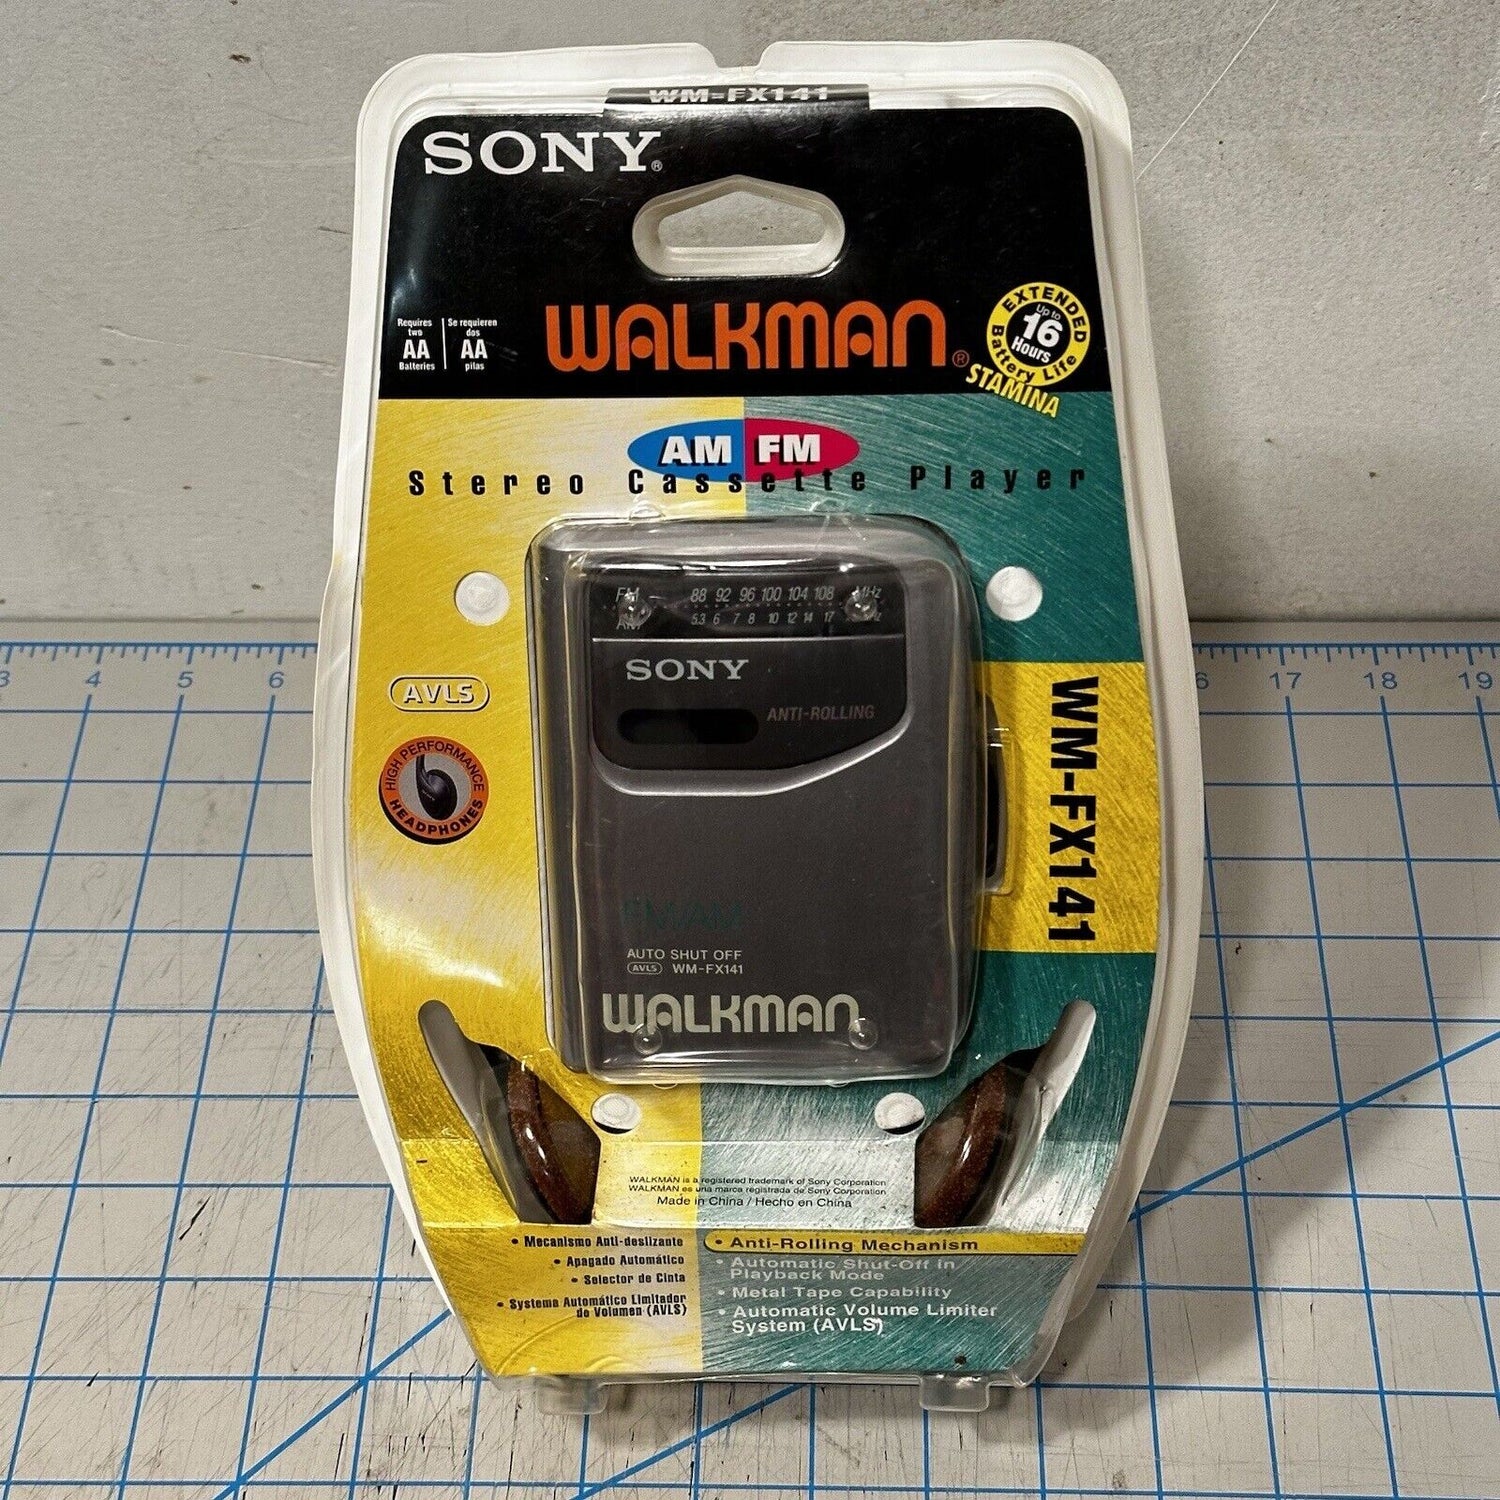 SONY WALKMAN WM-FX141 (NEW IN BOX) AM/FM PORTABLE CASSETTE PLAYER